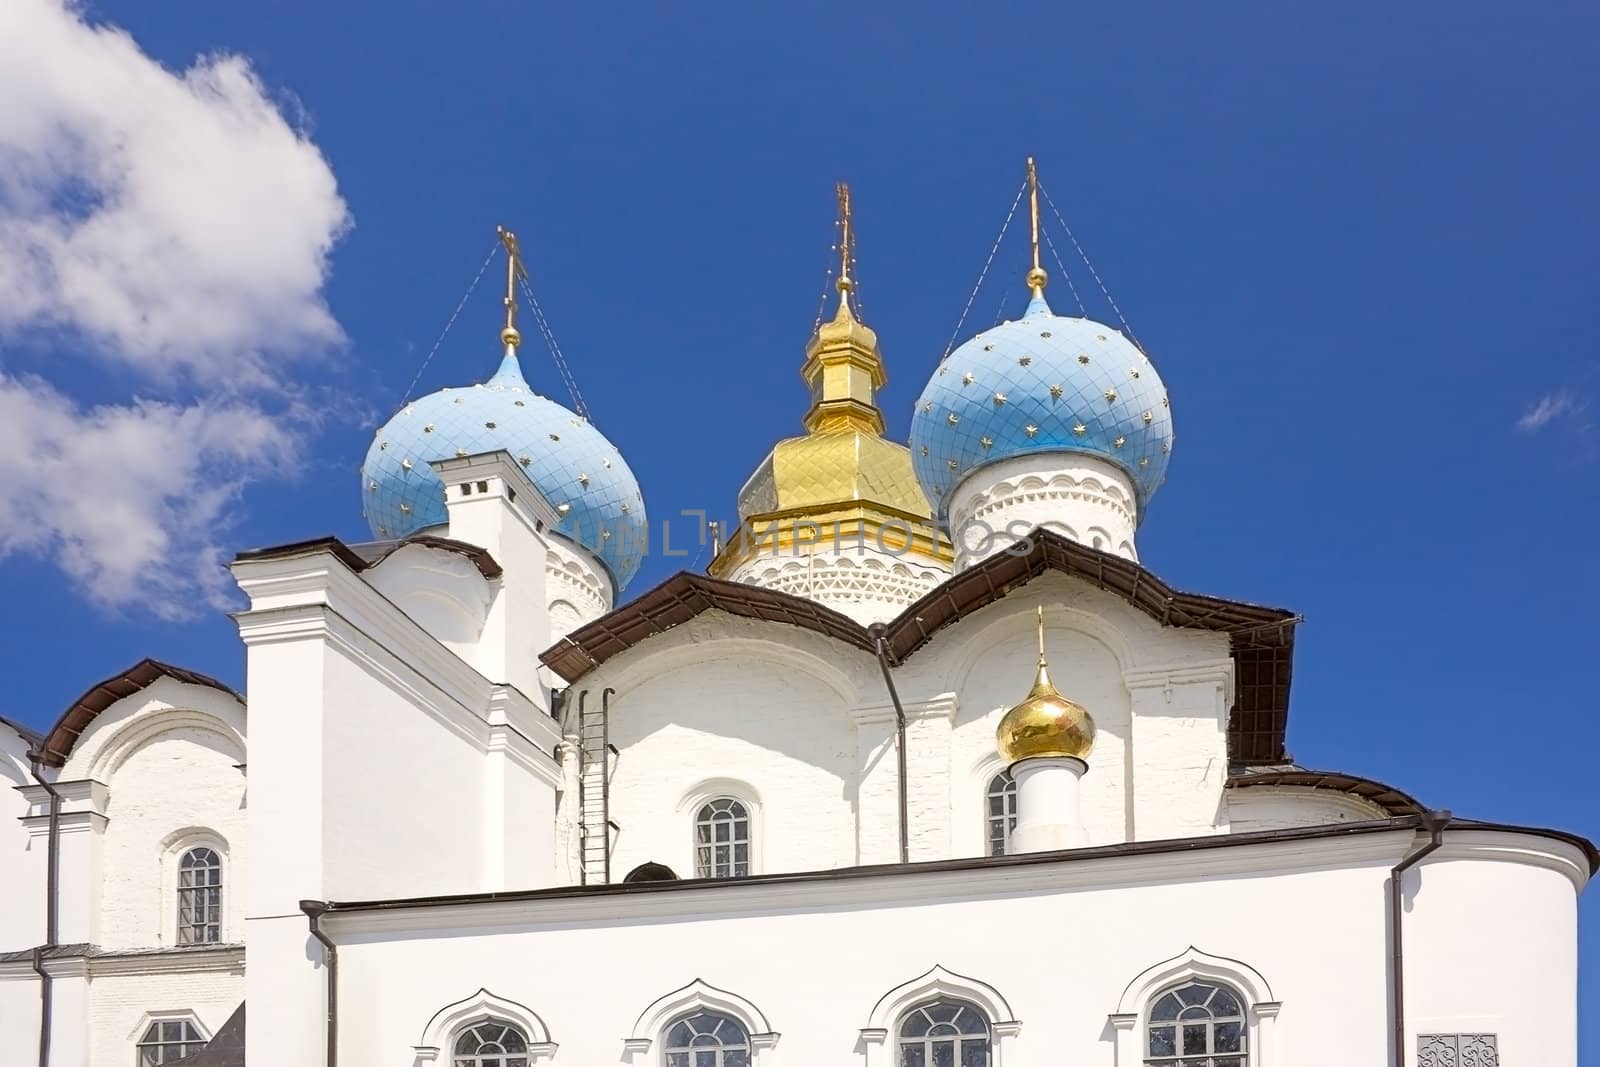 Church with domes against the blue sky, the Kazan Kremlin, Russia.
